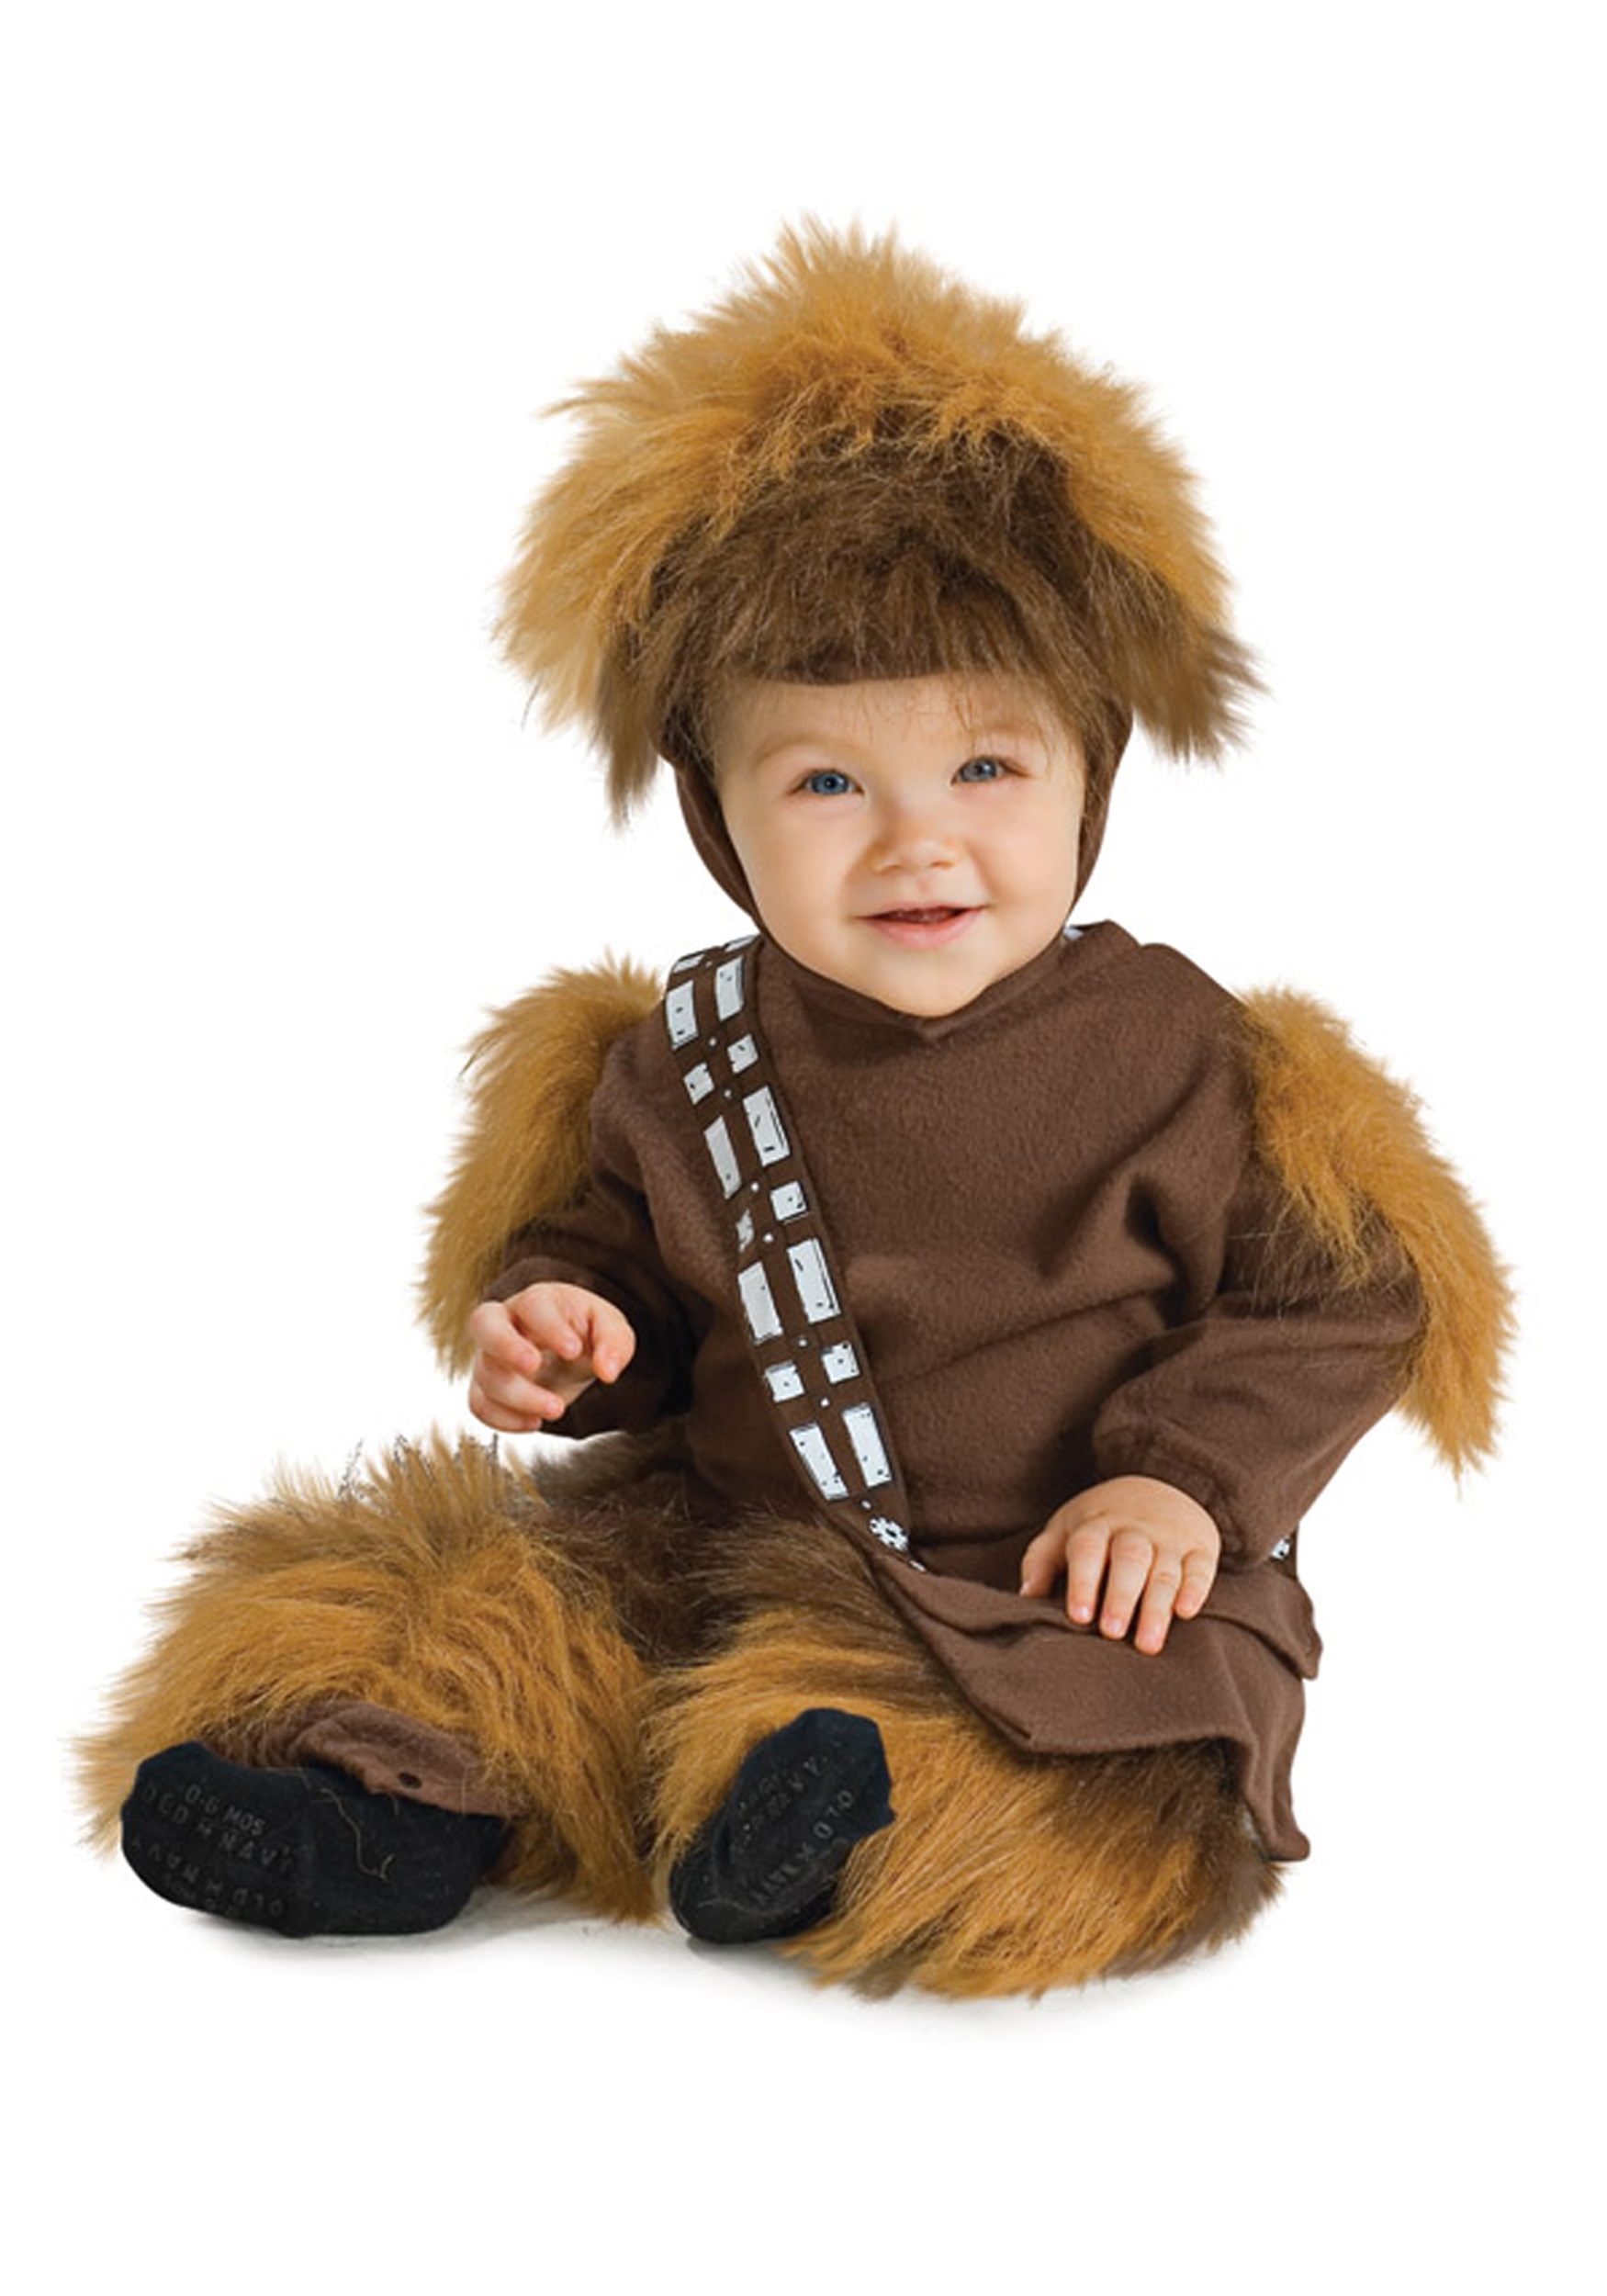 newborn star wars costume